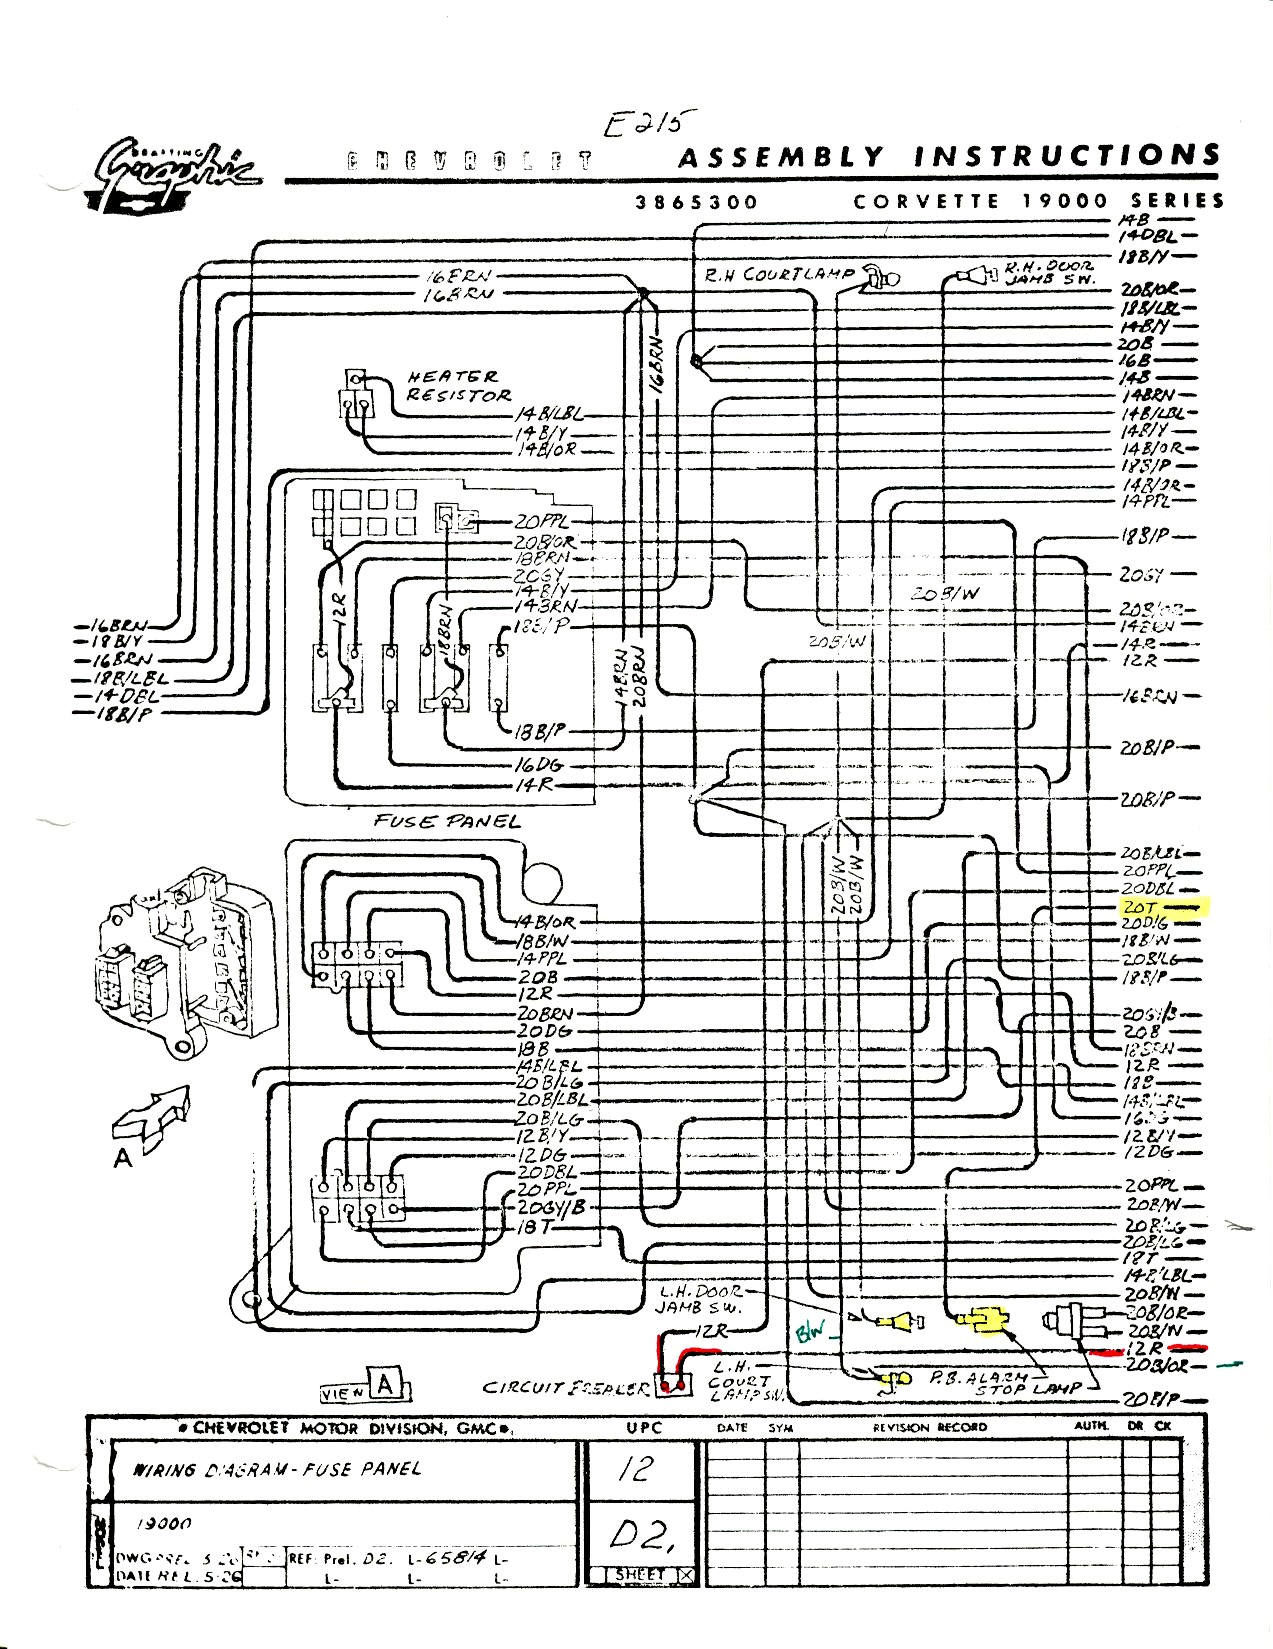 1965 Chevy Corvette Wiring Diagram Theblackdeathrun